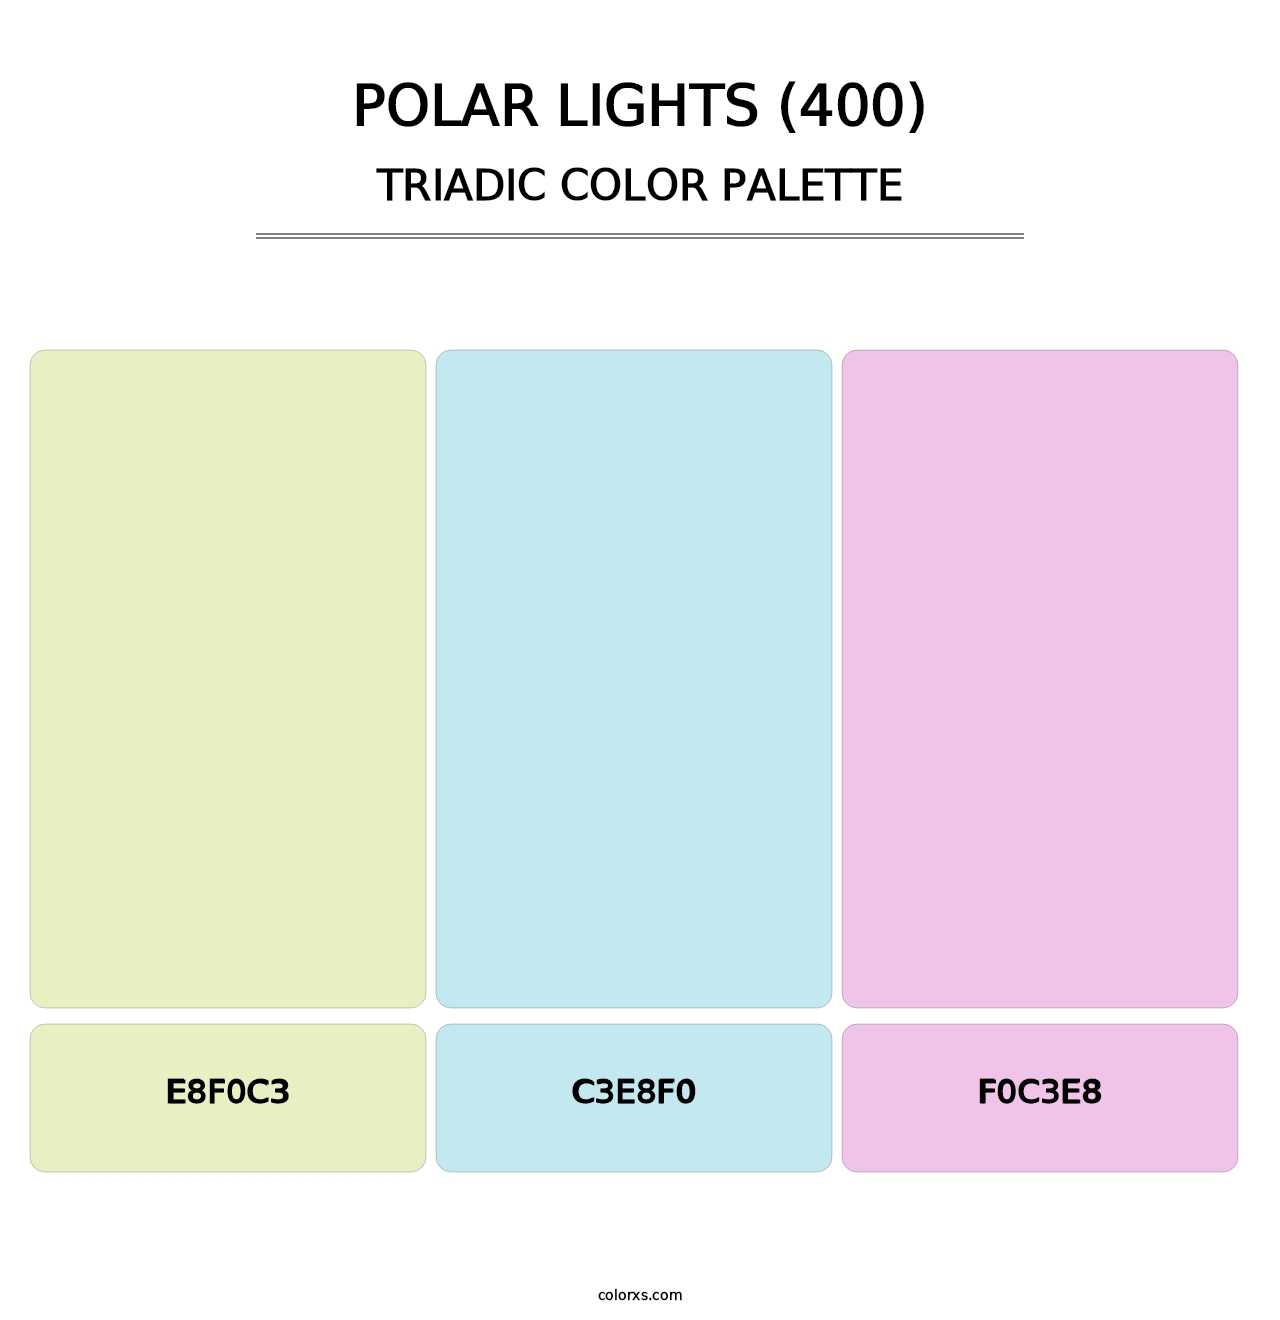 Polar Lights (400) - Triadic Color Palette